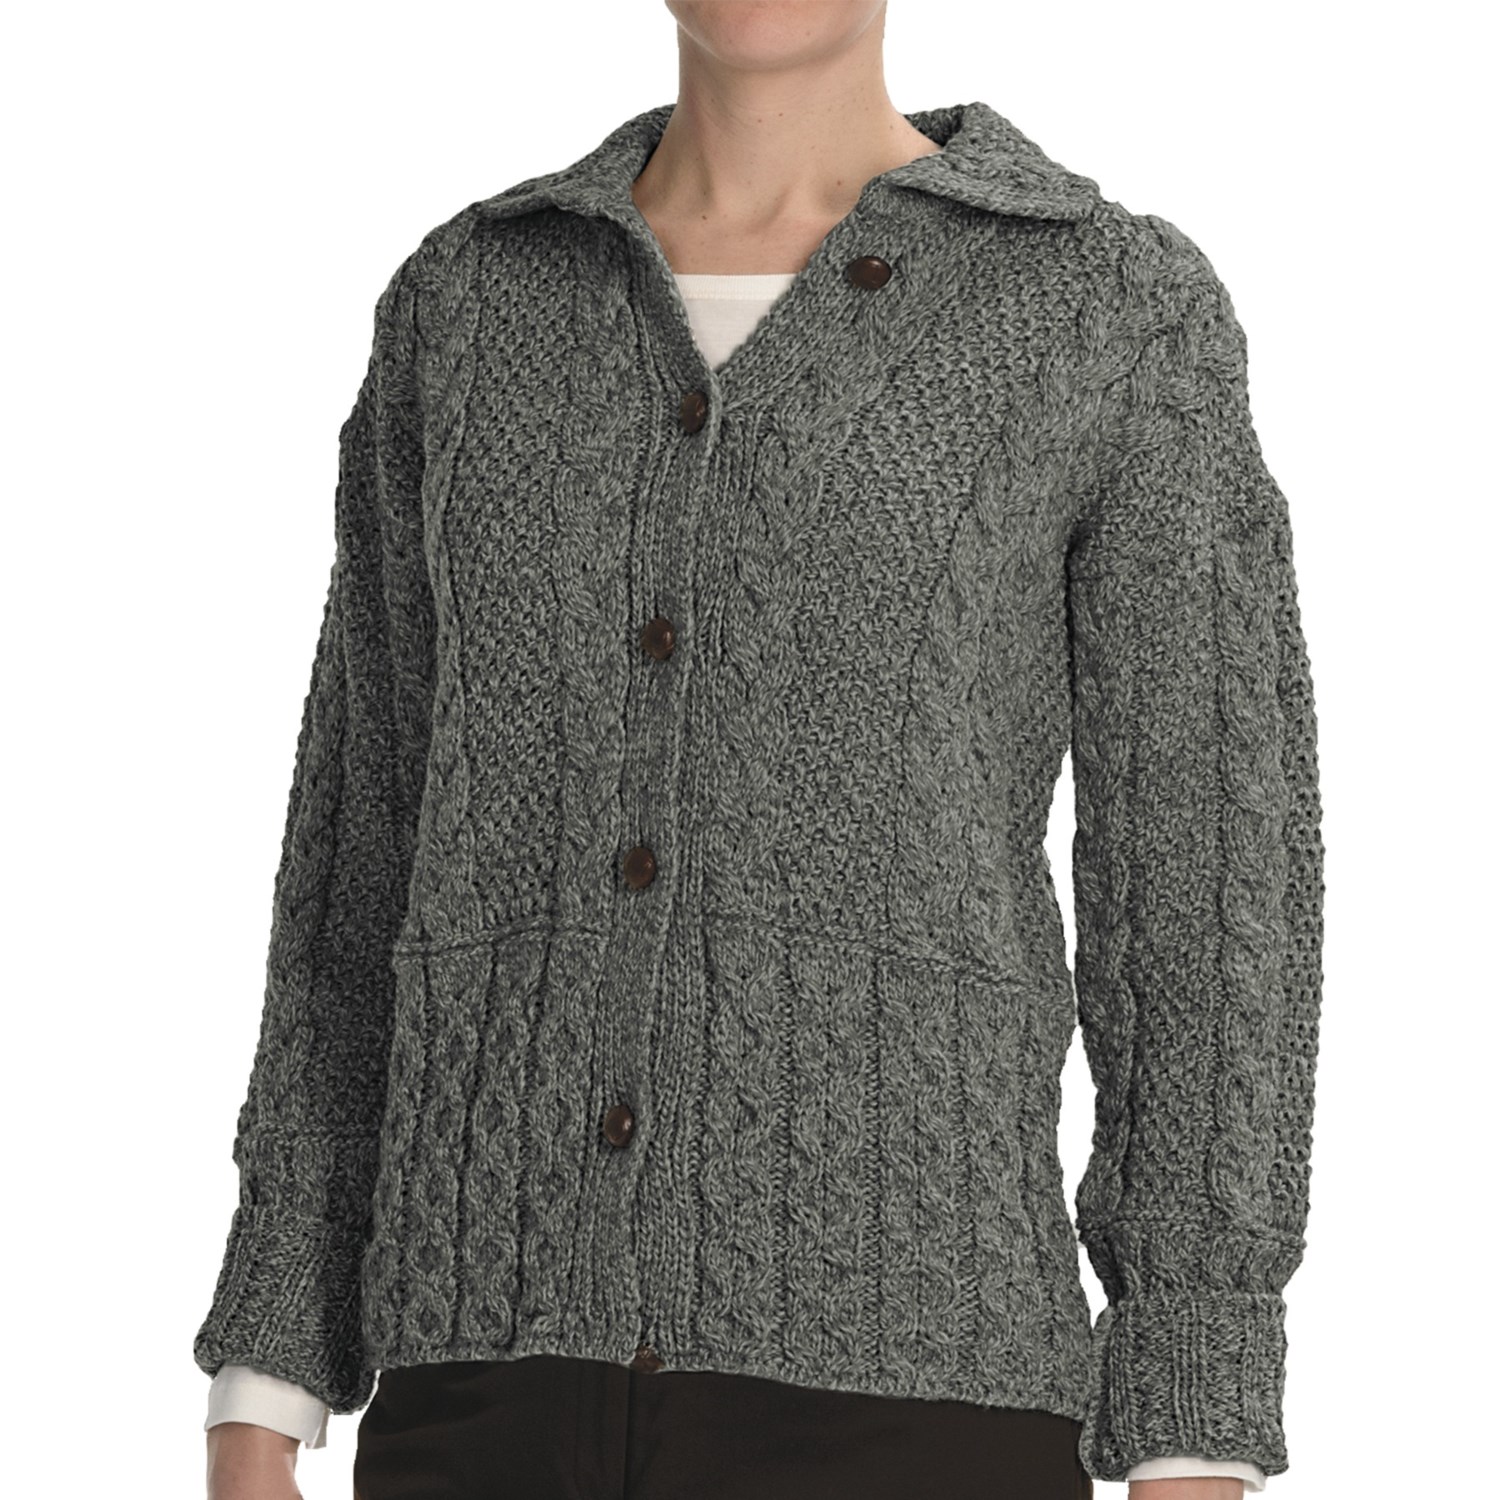 Women'S Cardigan Sale - English Sweater Vest